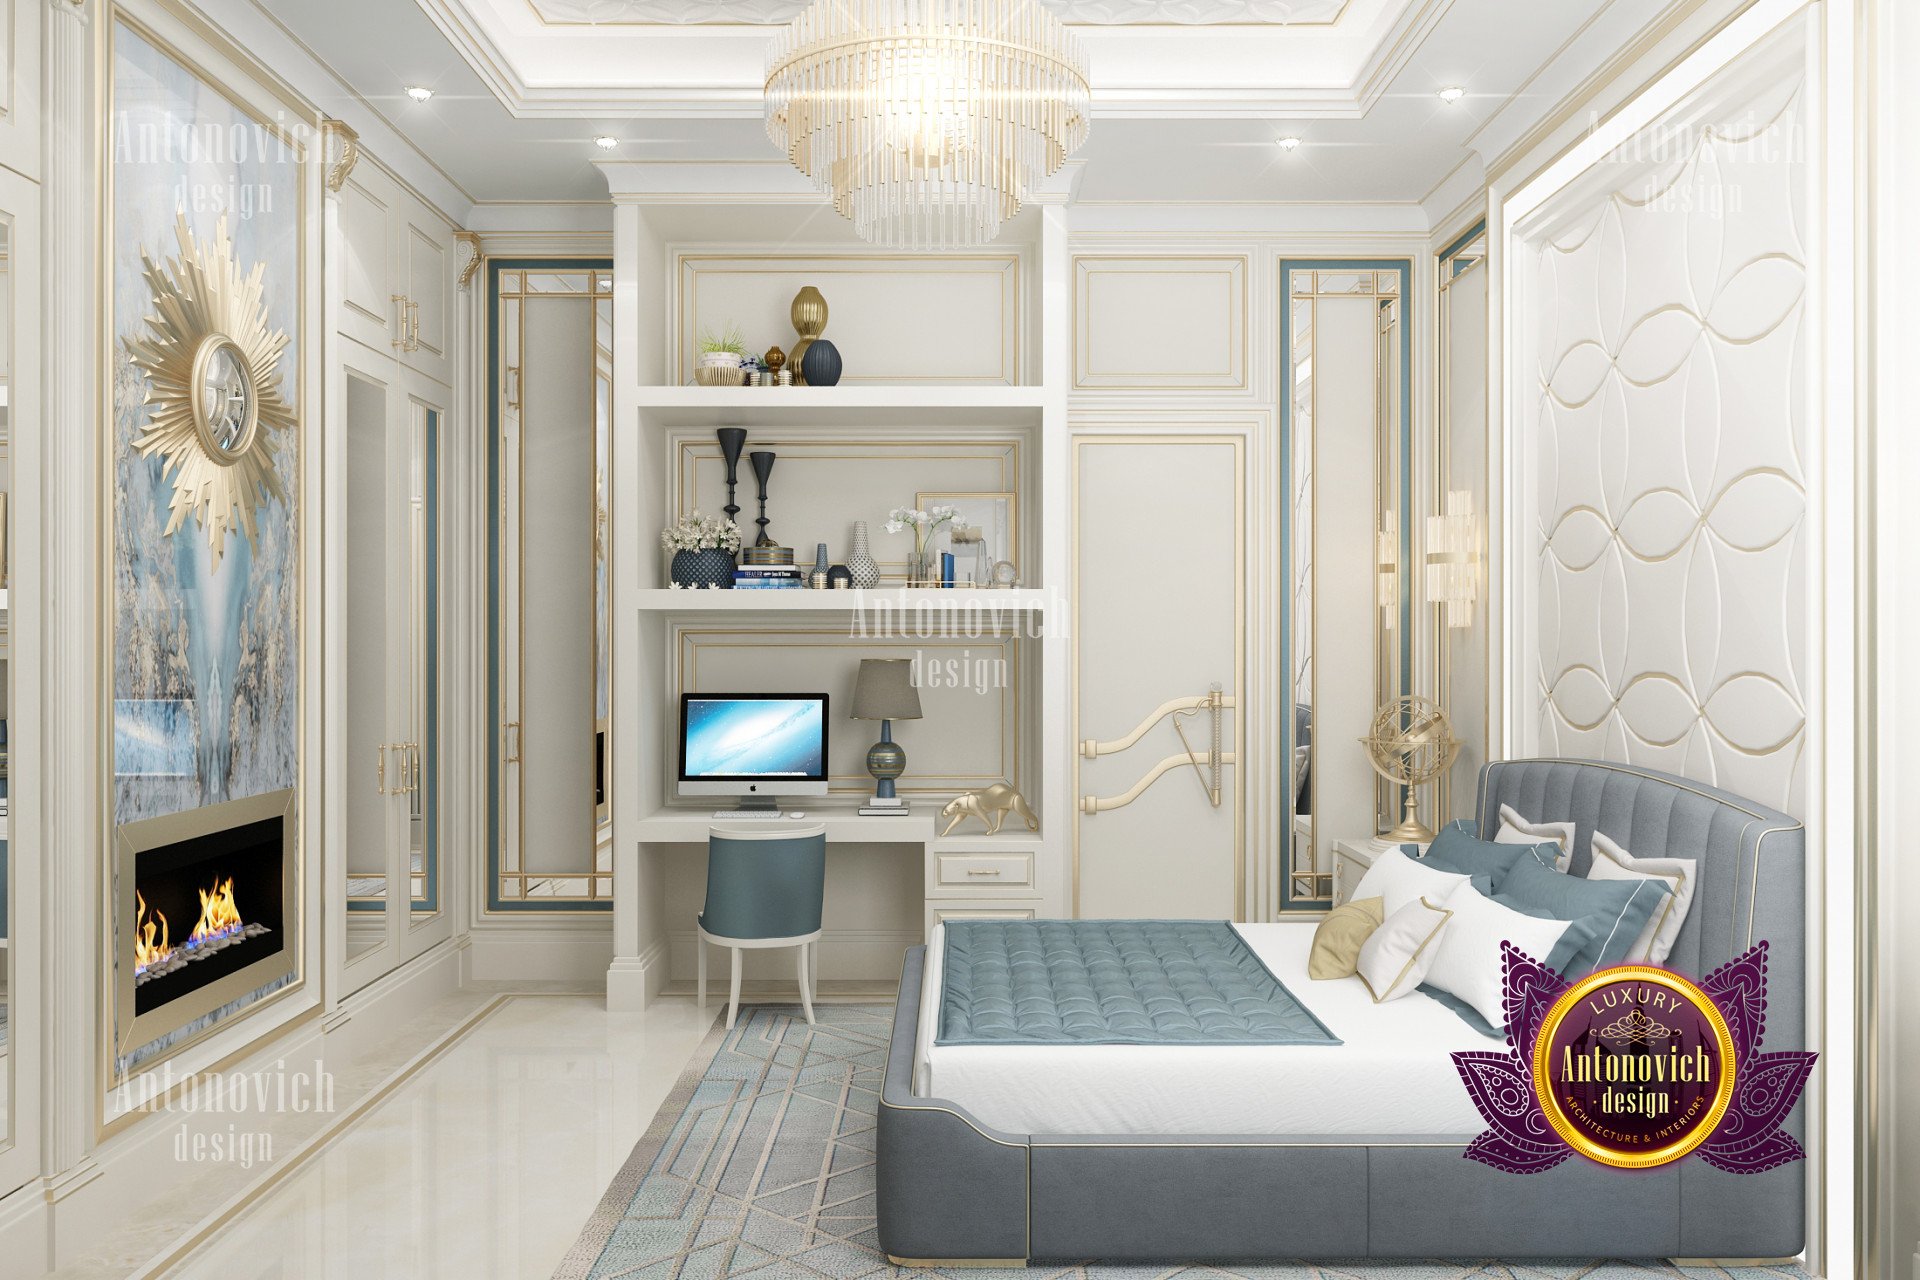 Boy luxury bedroom interior